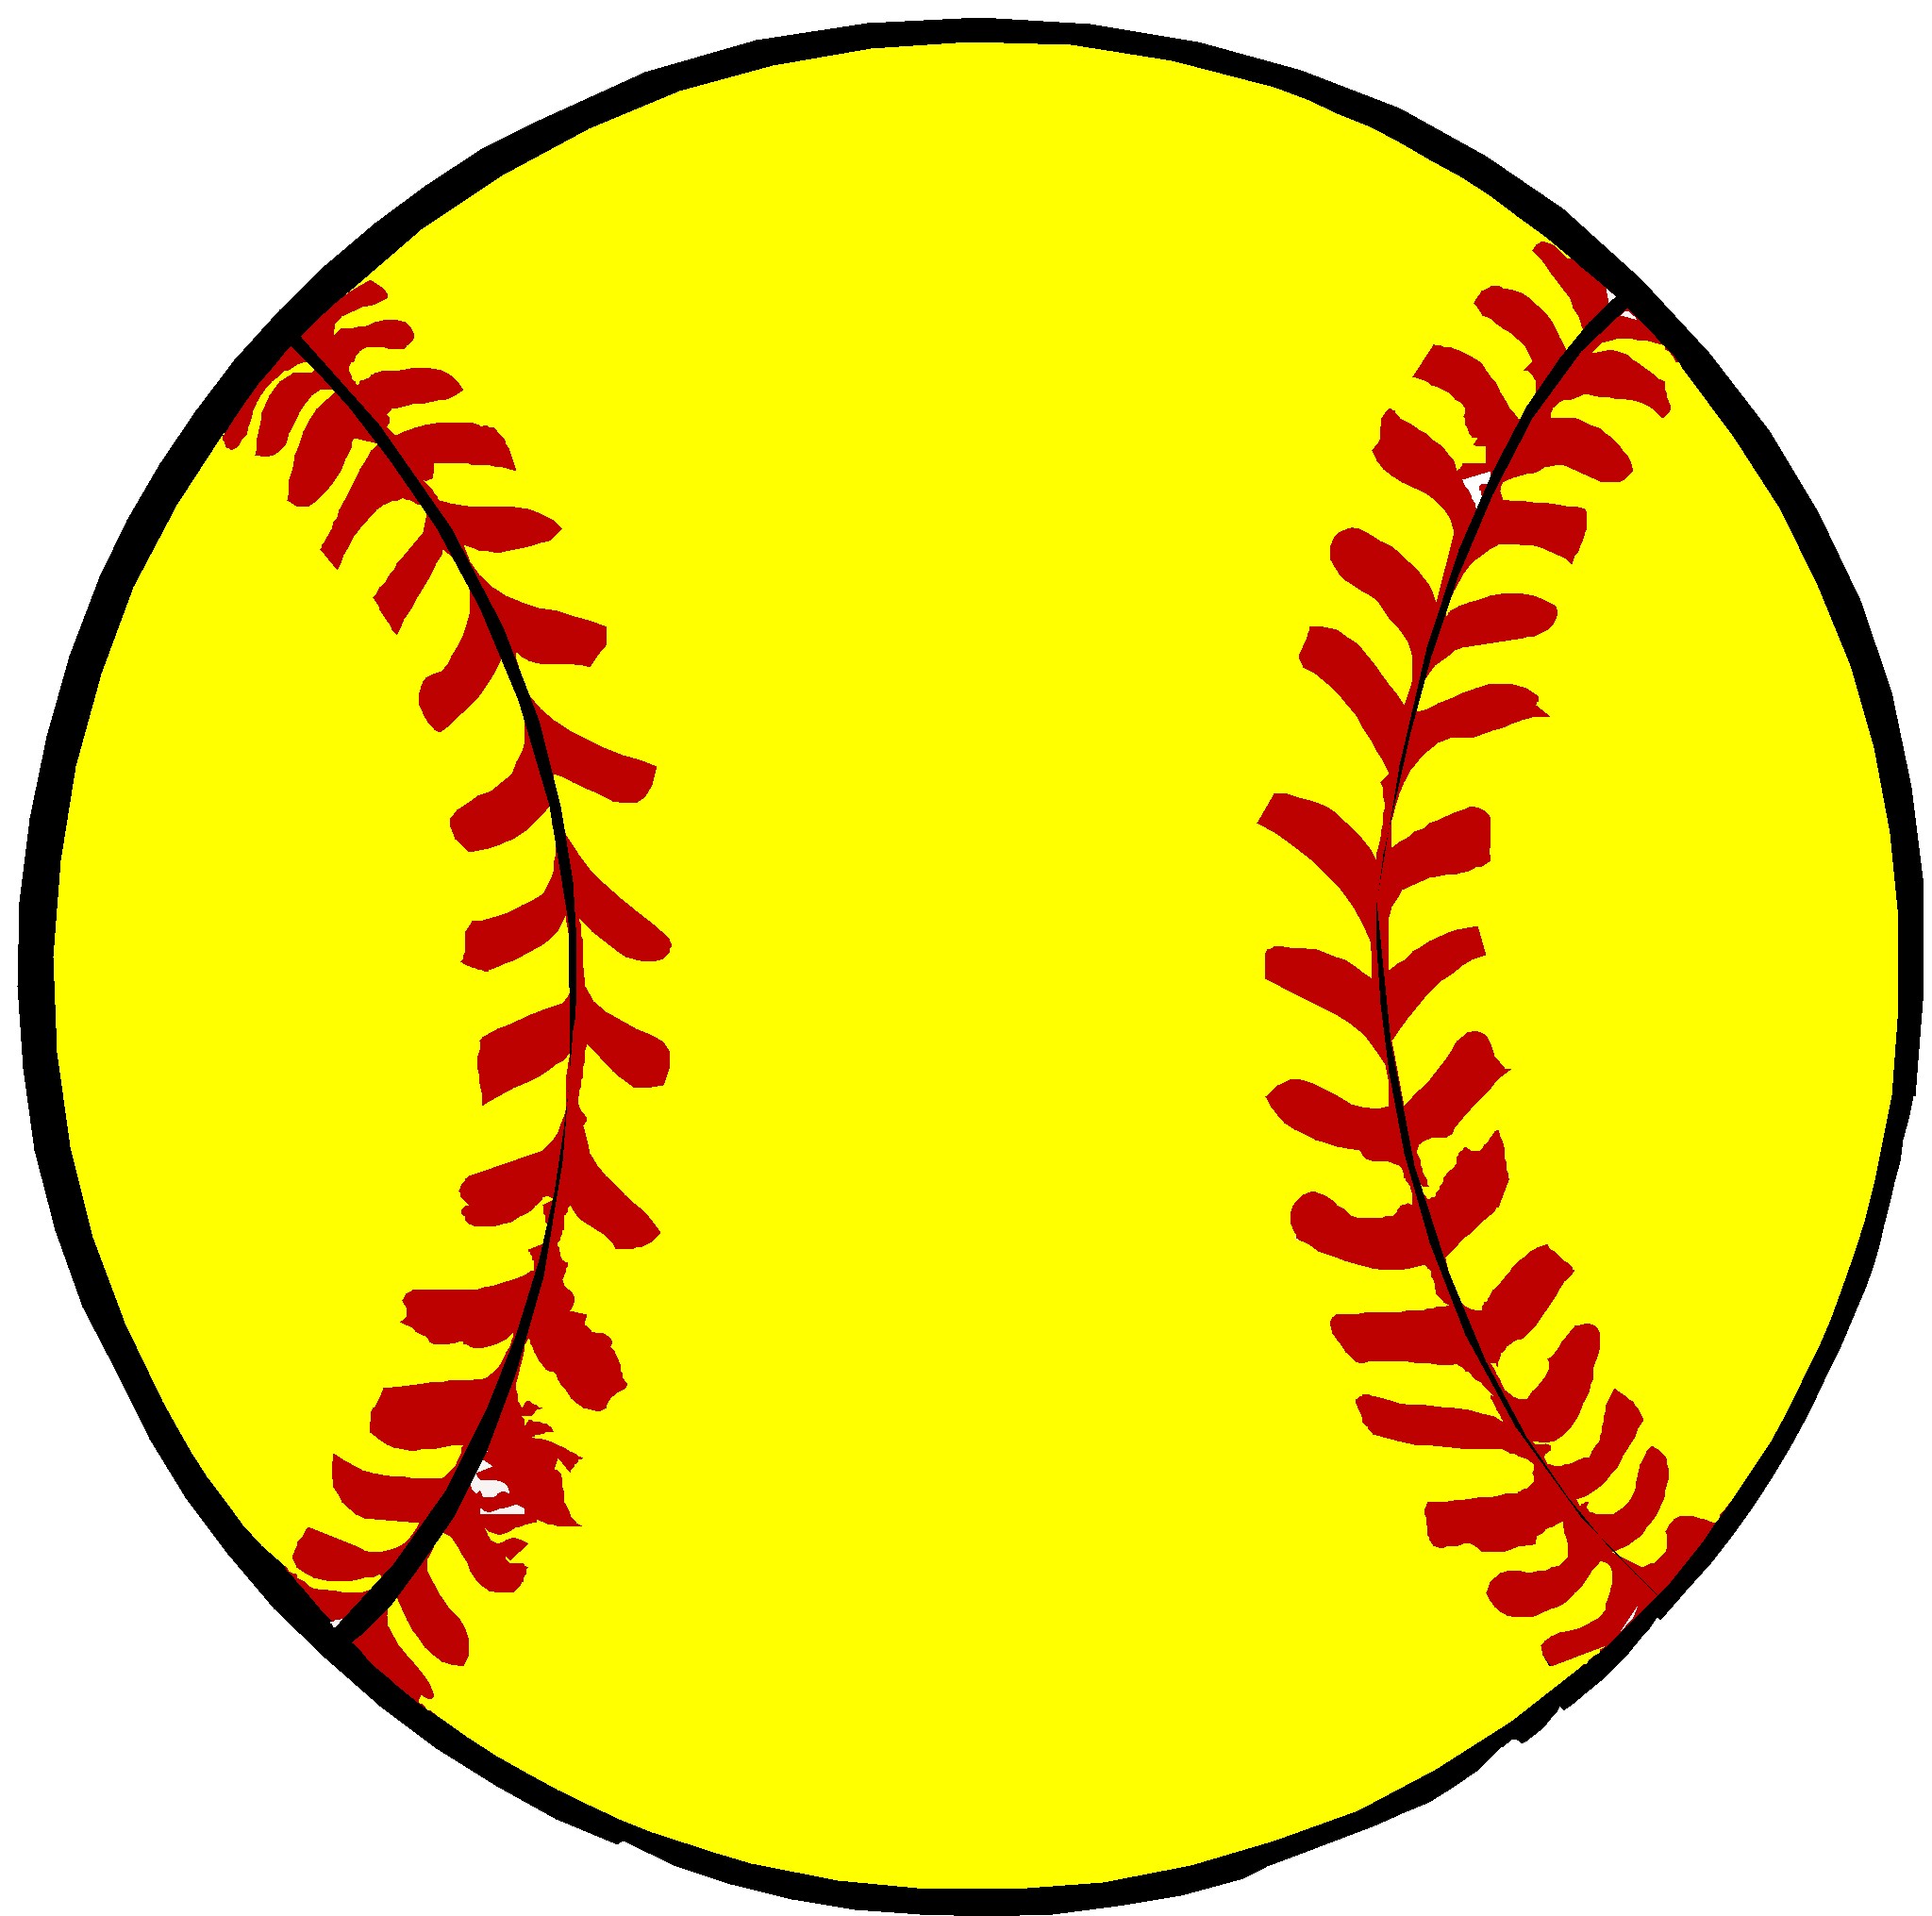 Images For > Softball Logo Clip Art